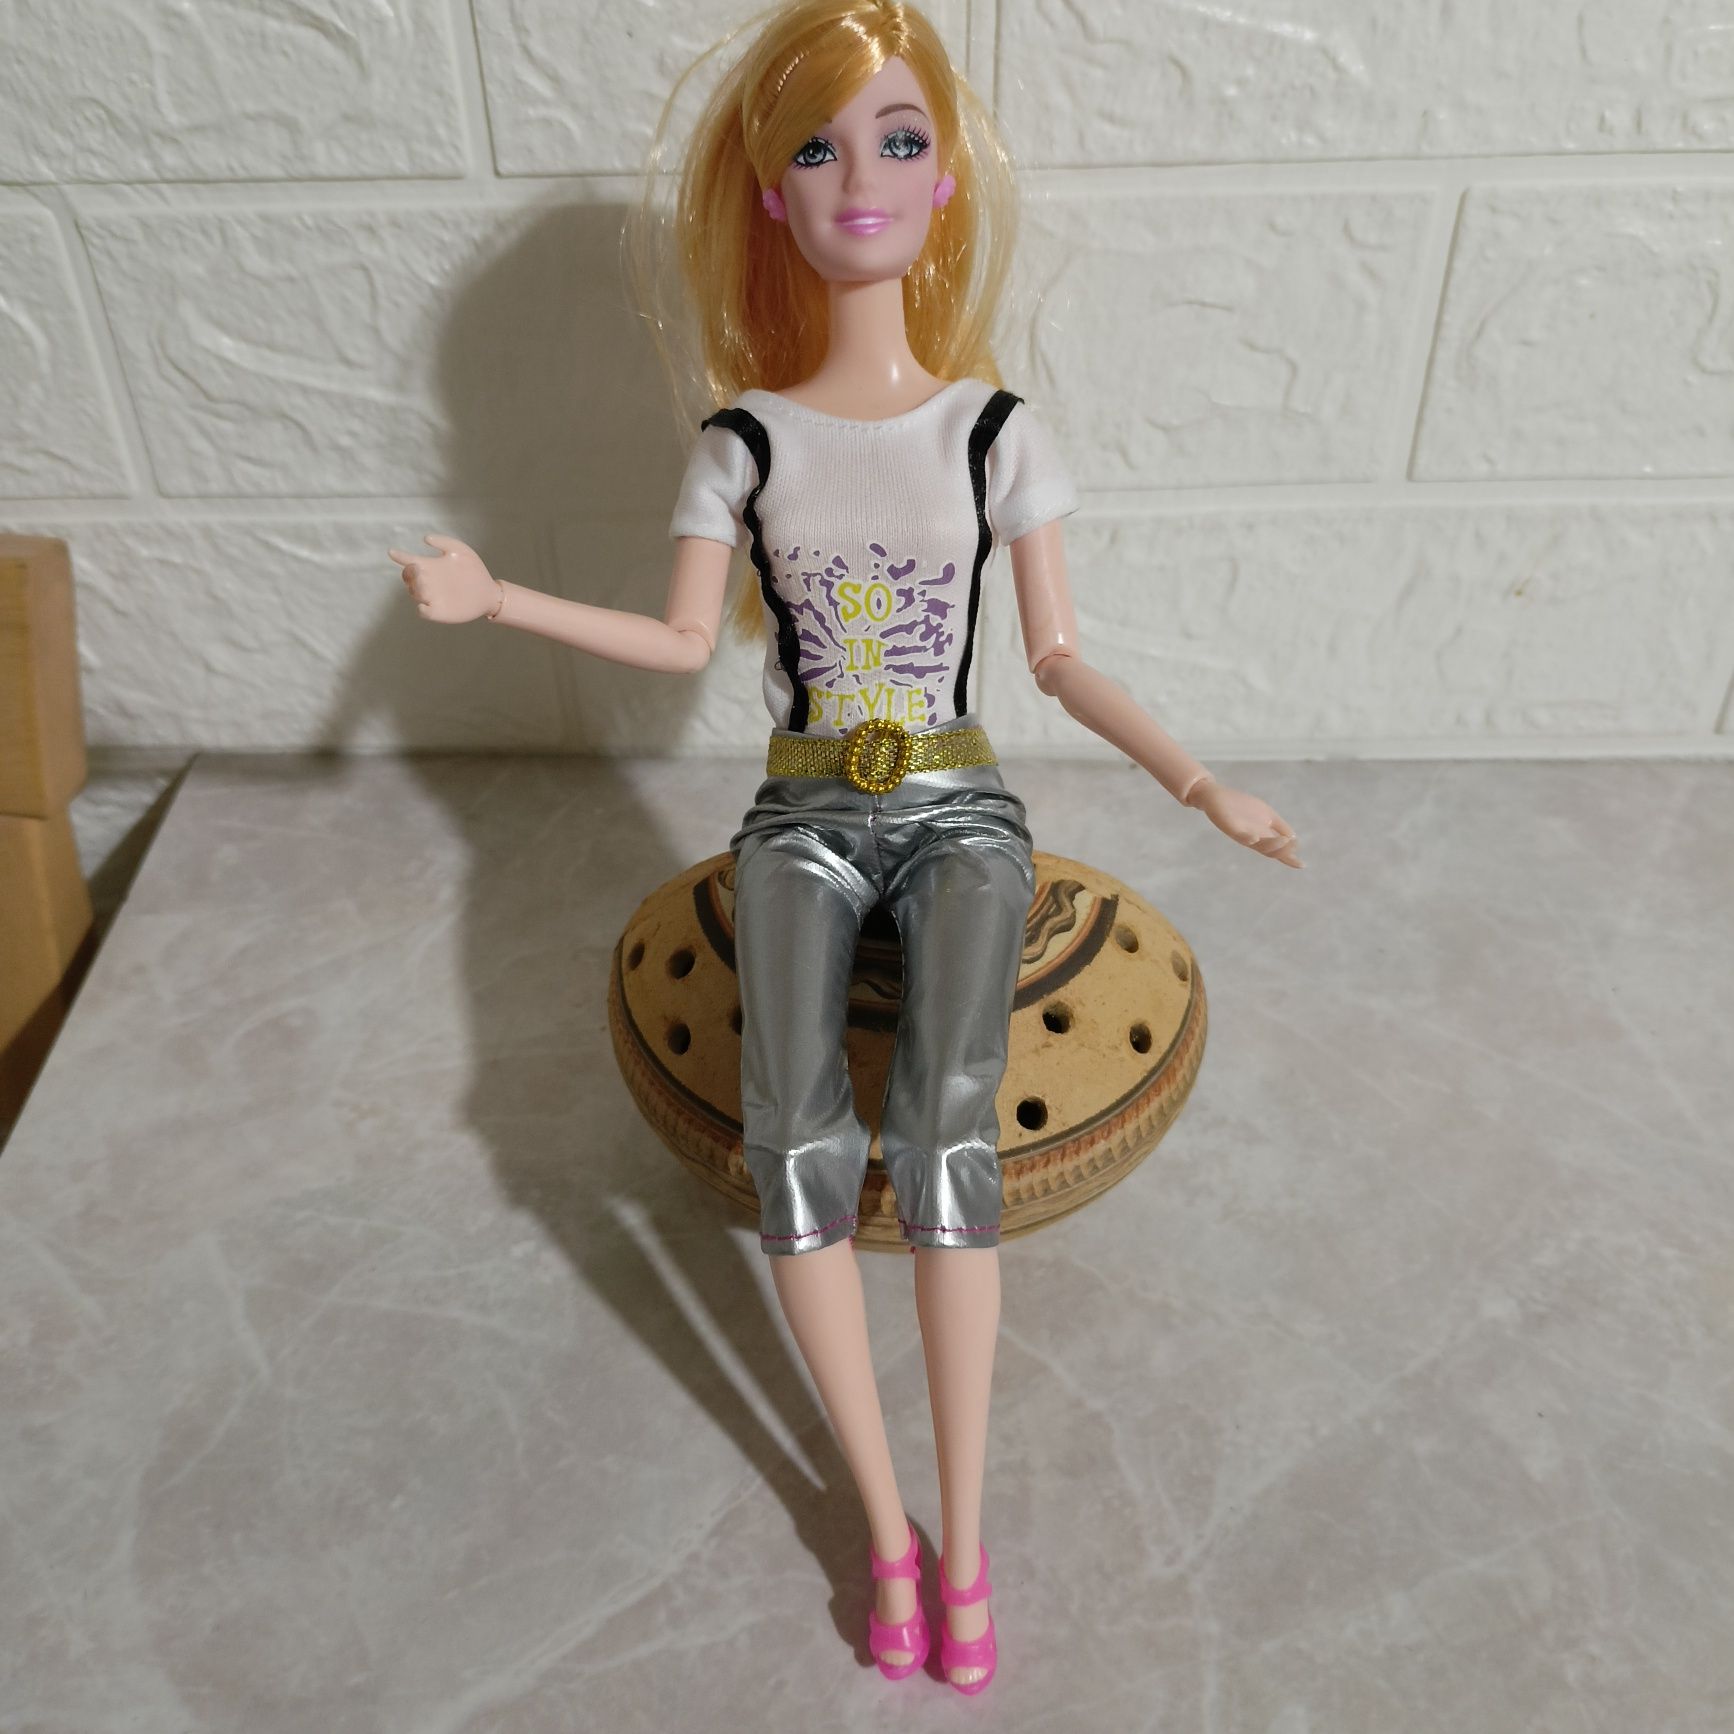 Lalka Barbie ruchome części ciała